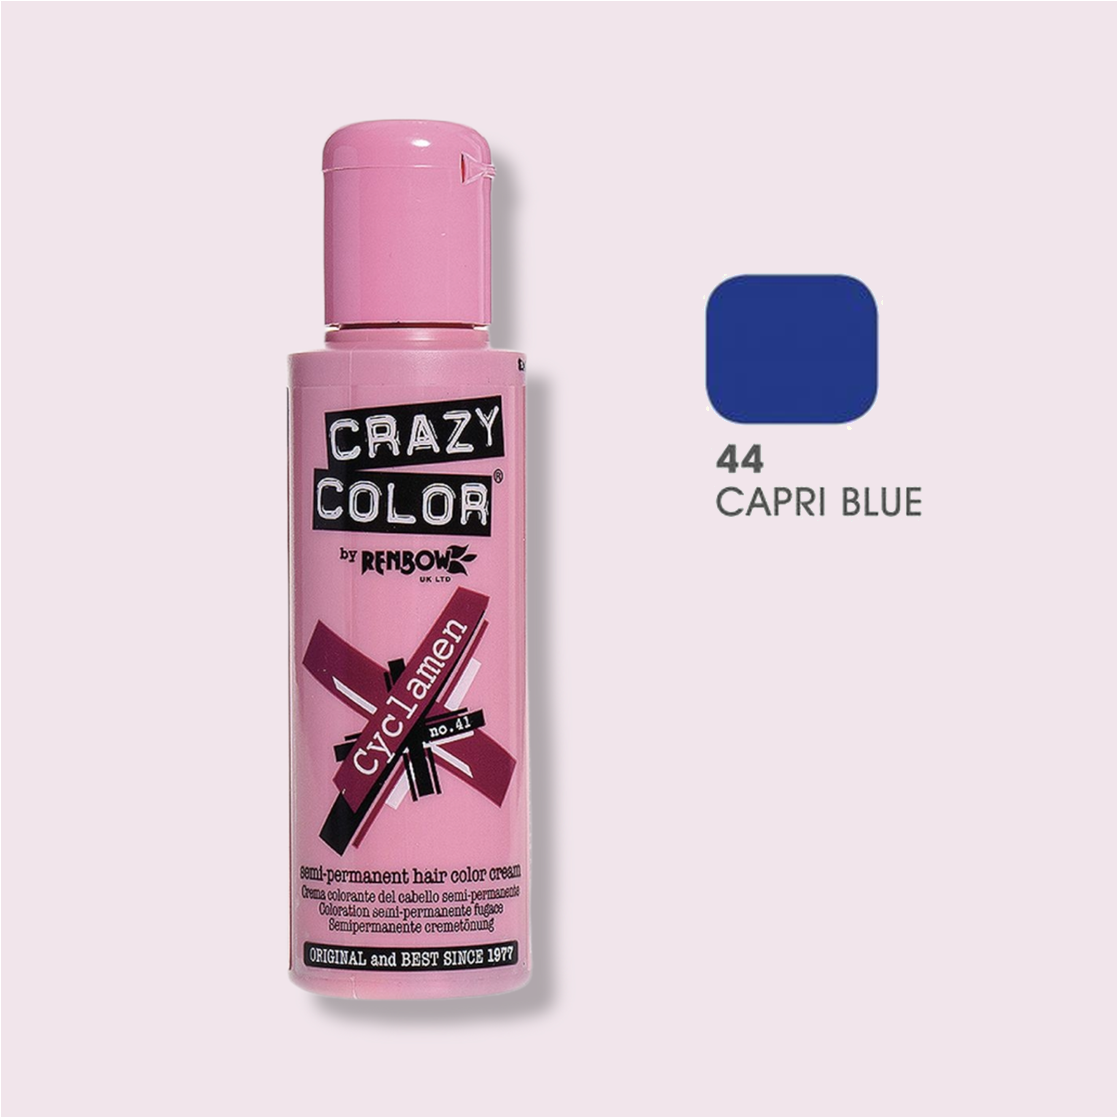 Crazy Color Capri Blue nº 44 Tinte de Fantasía - Grupo Yosvic